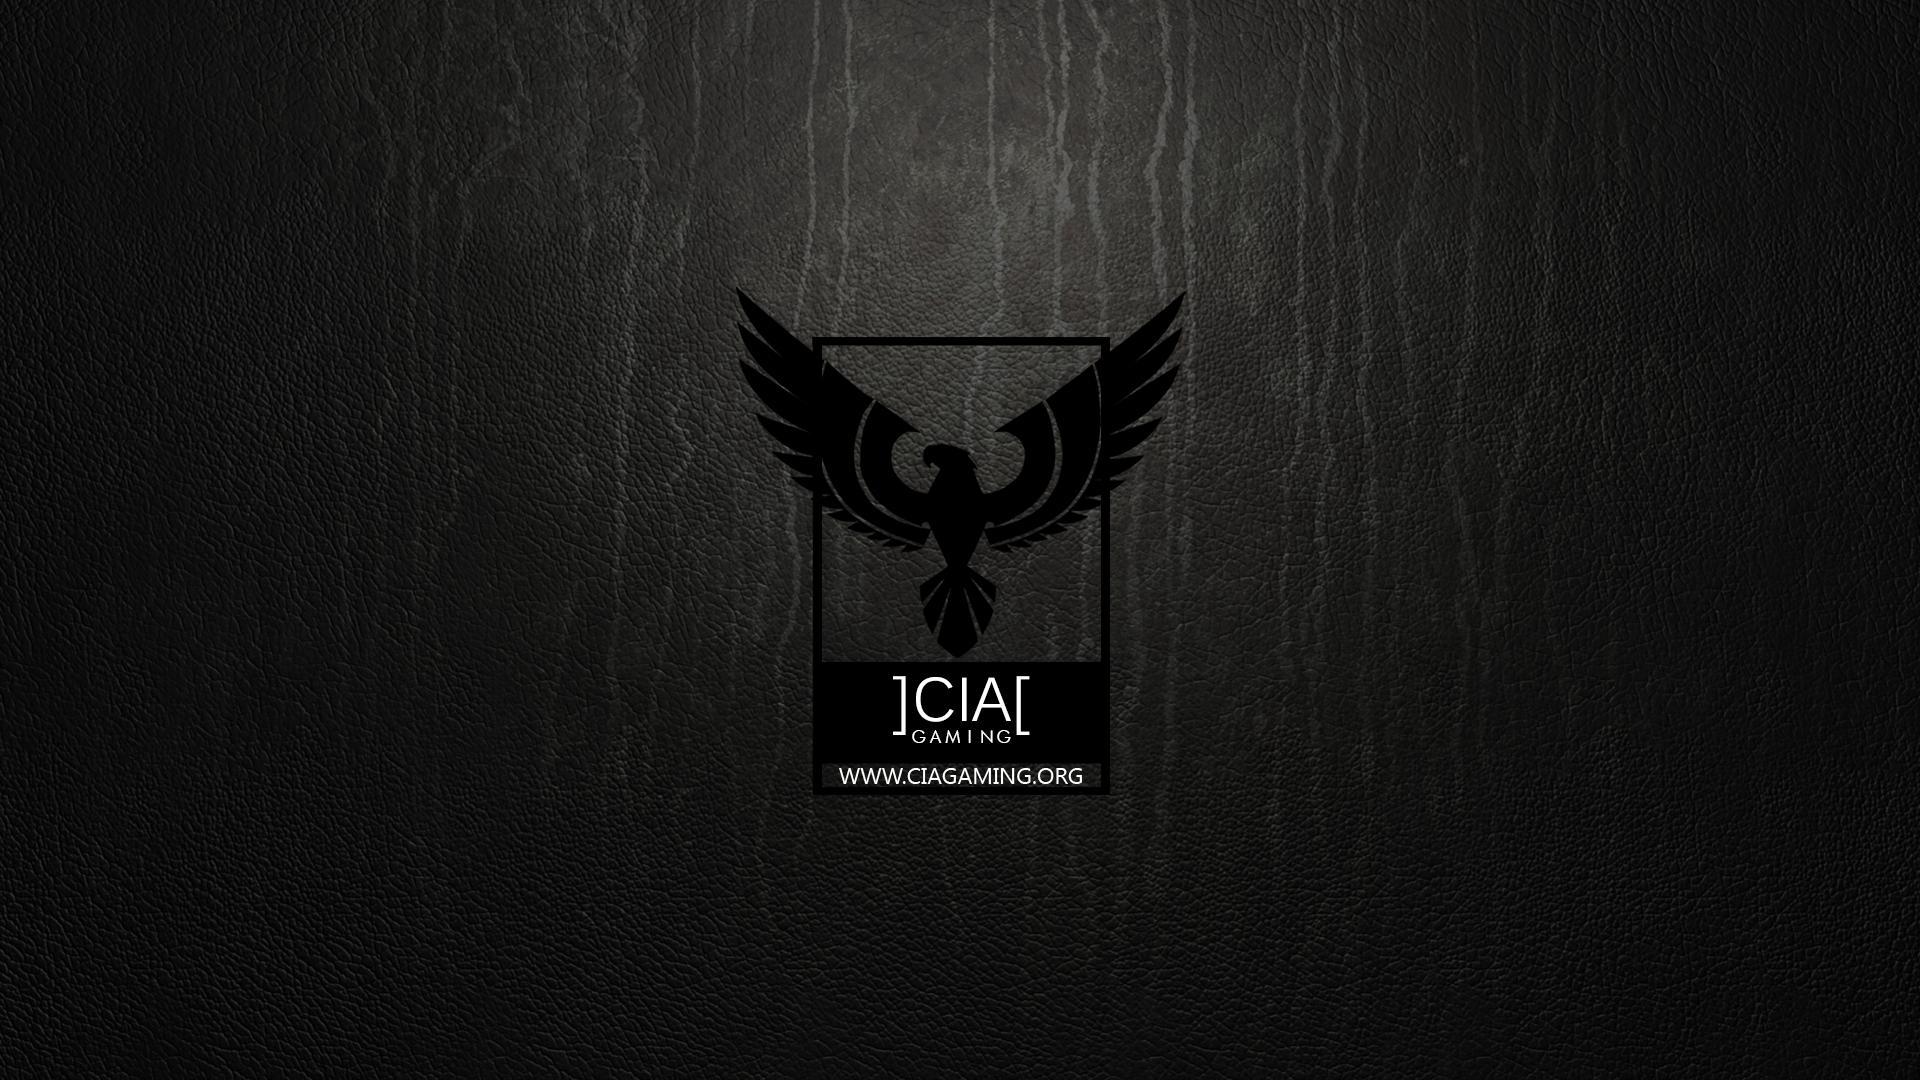 Cia Logo Wallpaper